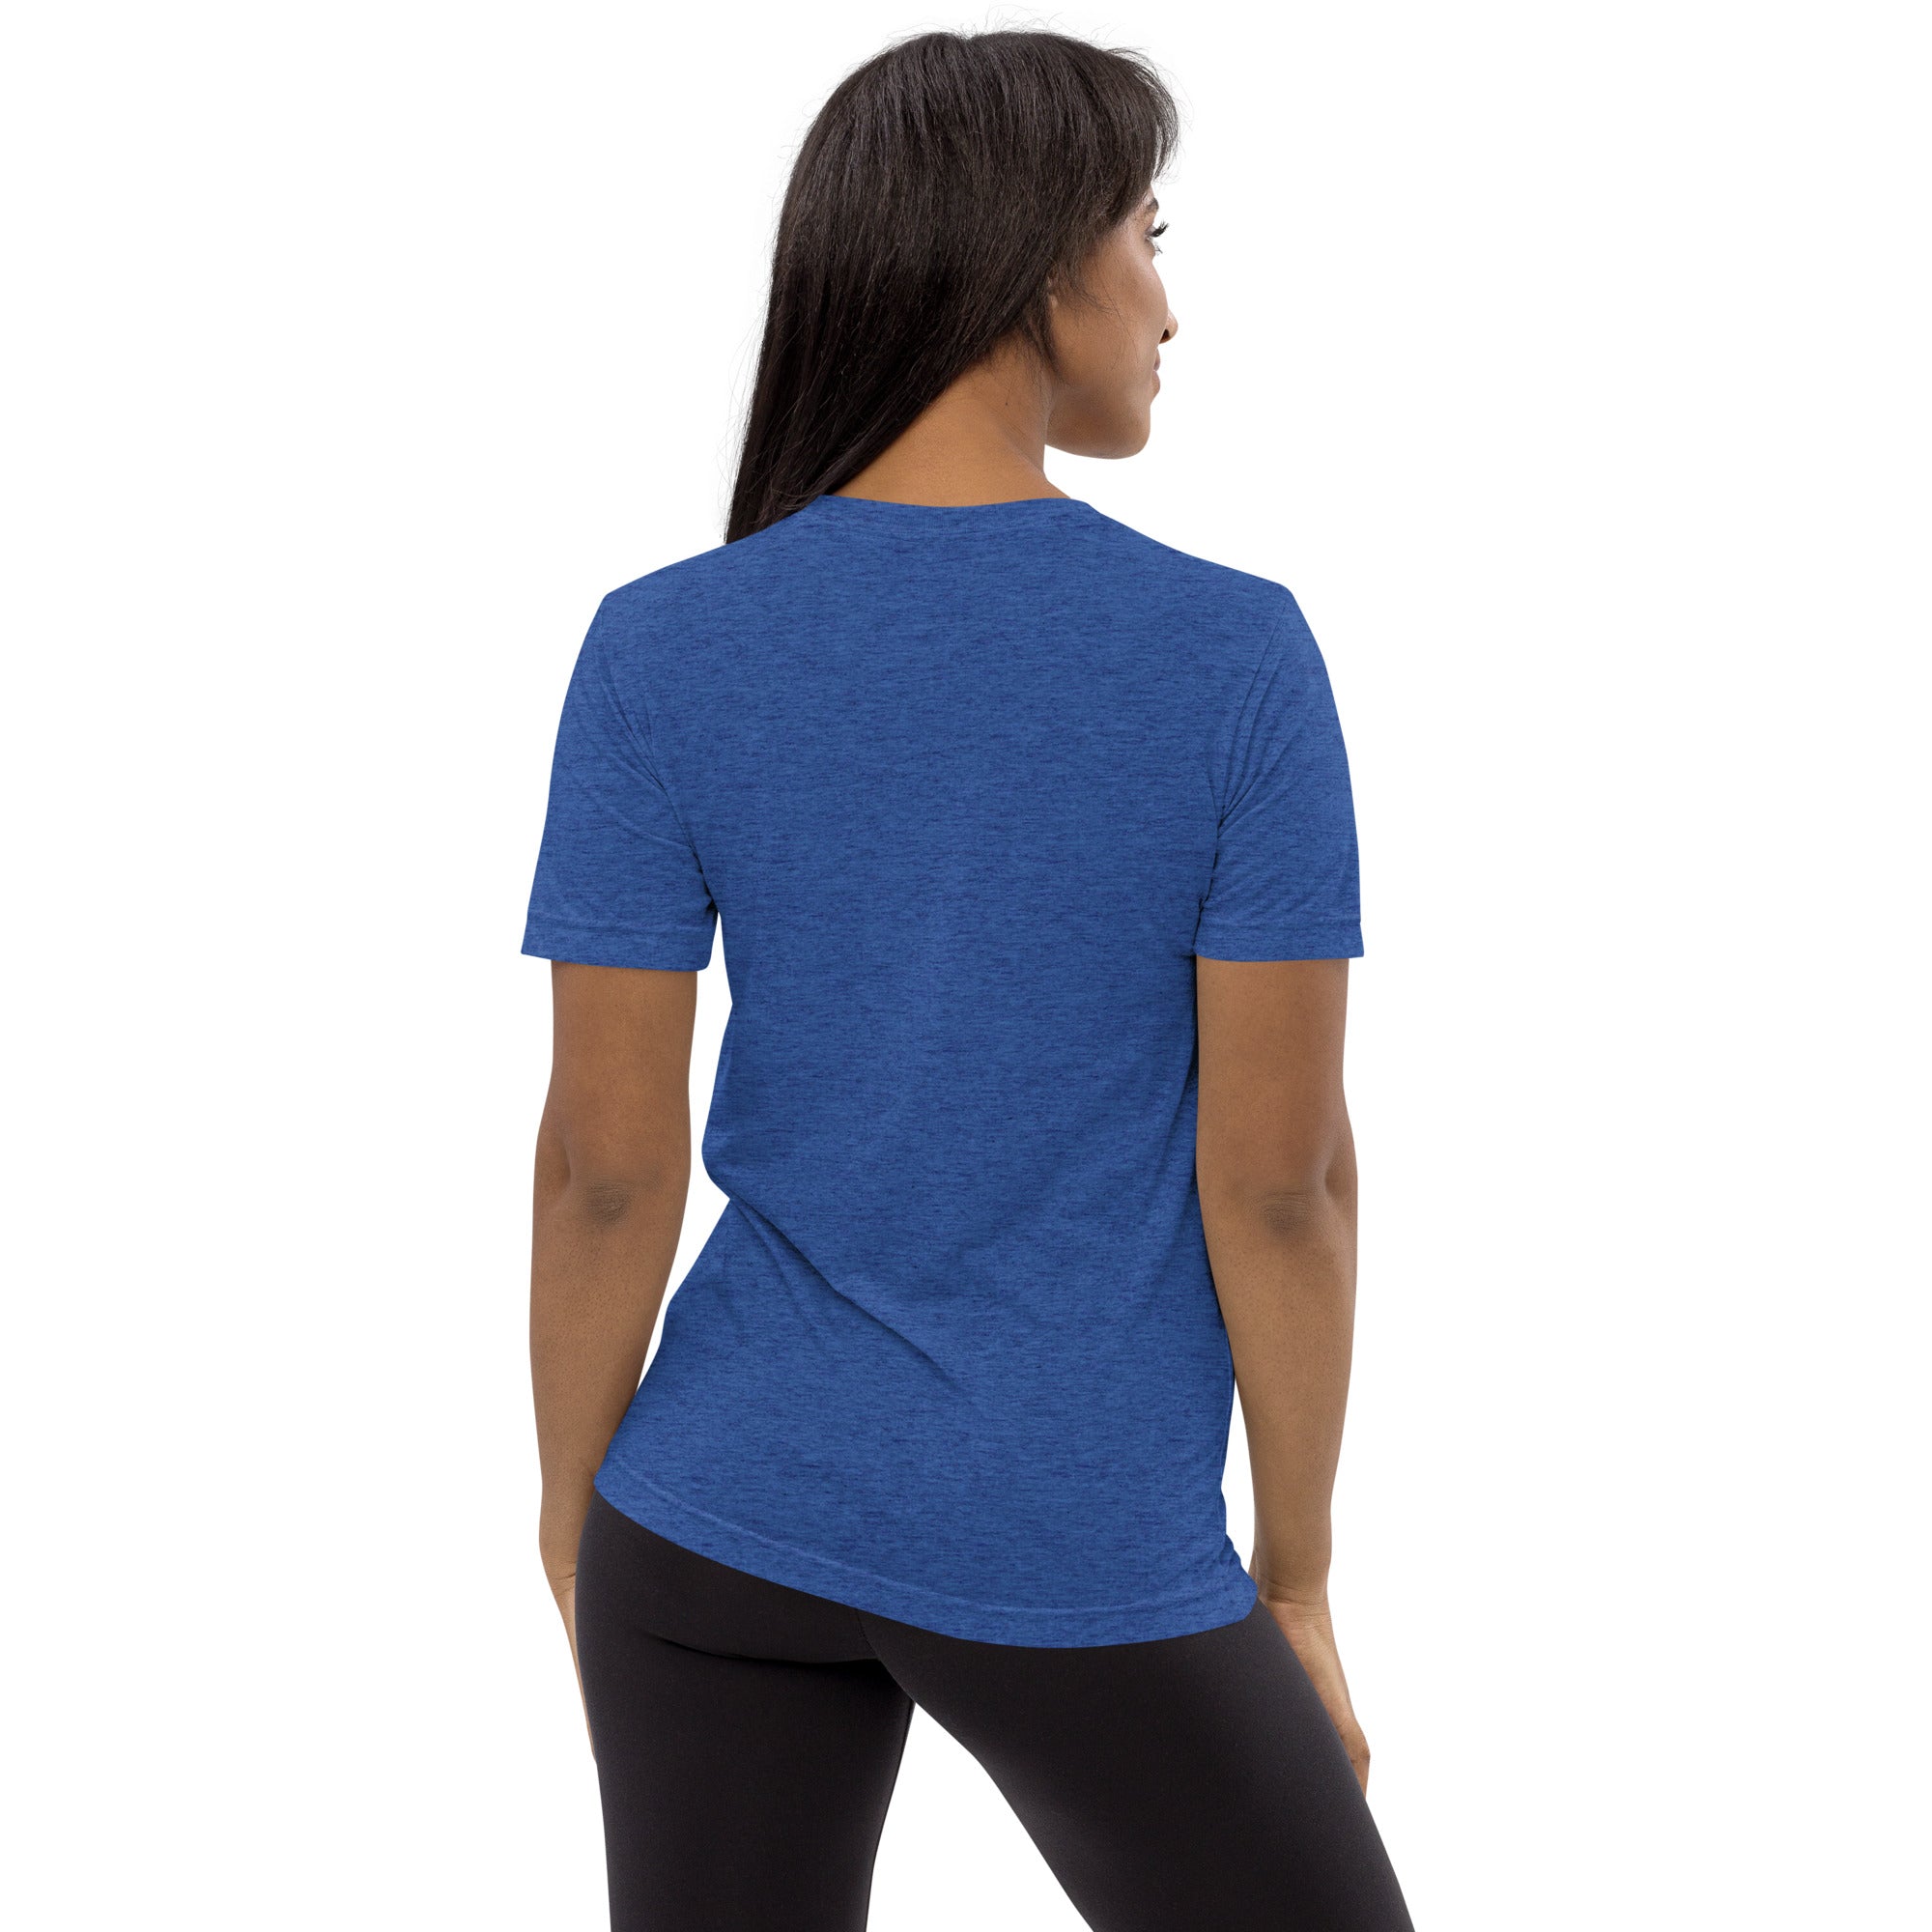 Run Sweat Root'd Repeat Premium Tri Blend Unisex T-Shirt